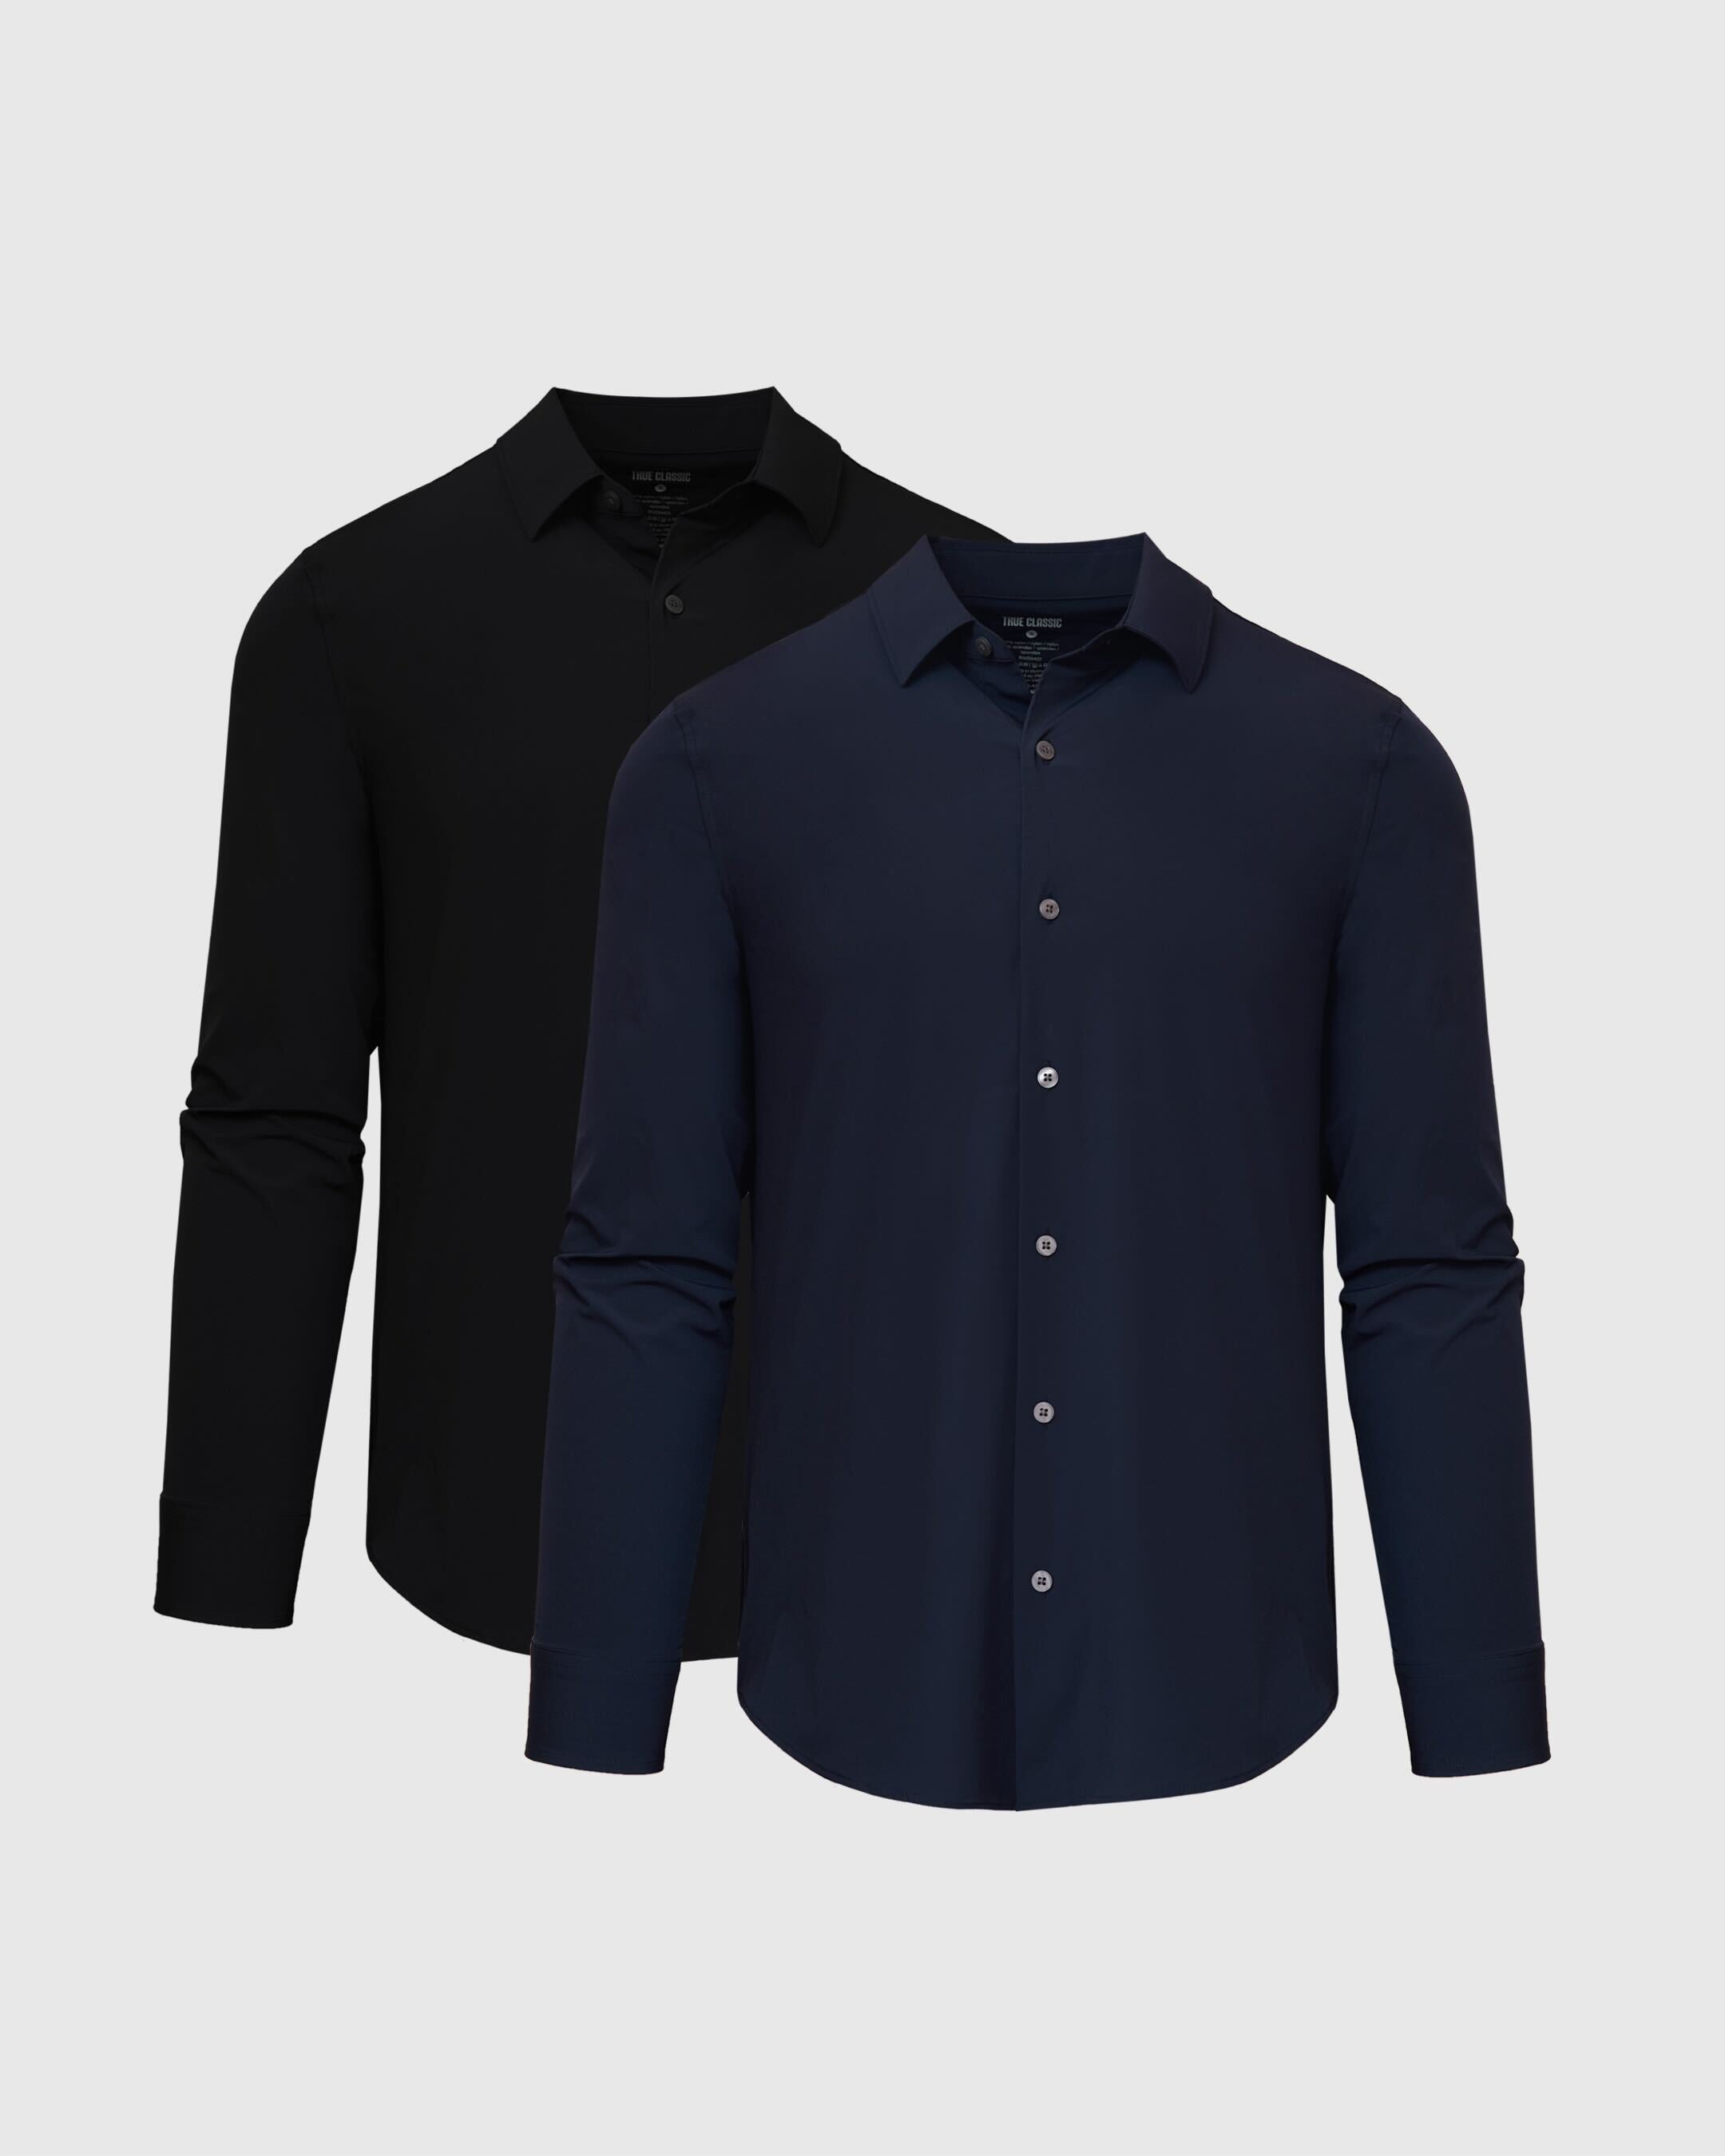 Navy and Black Performance Lightweight Dress Shirt 2-Pack